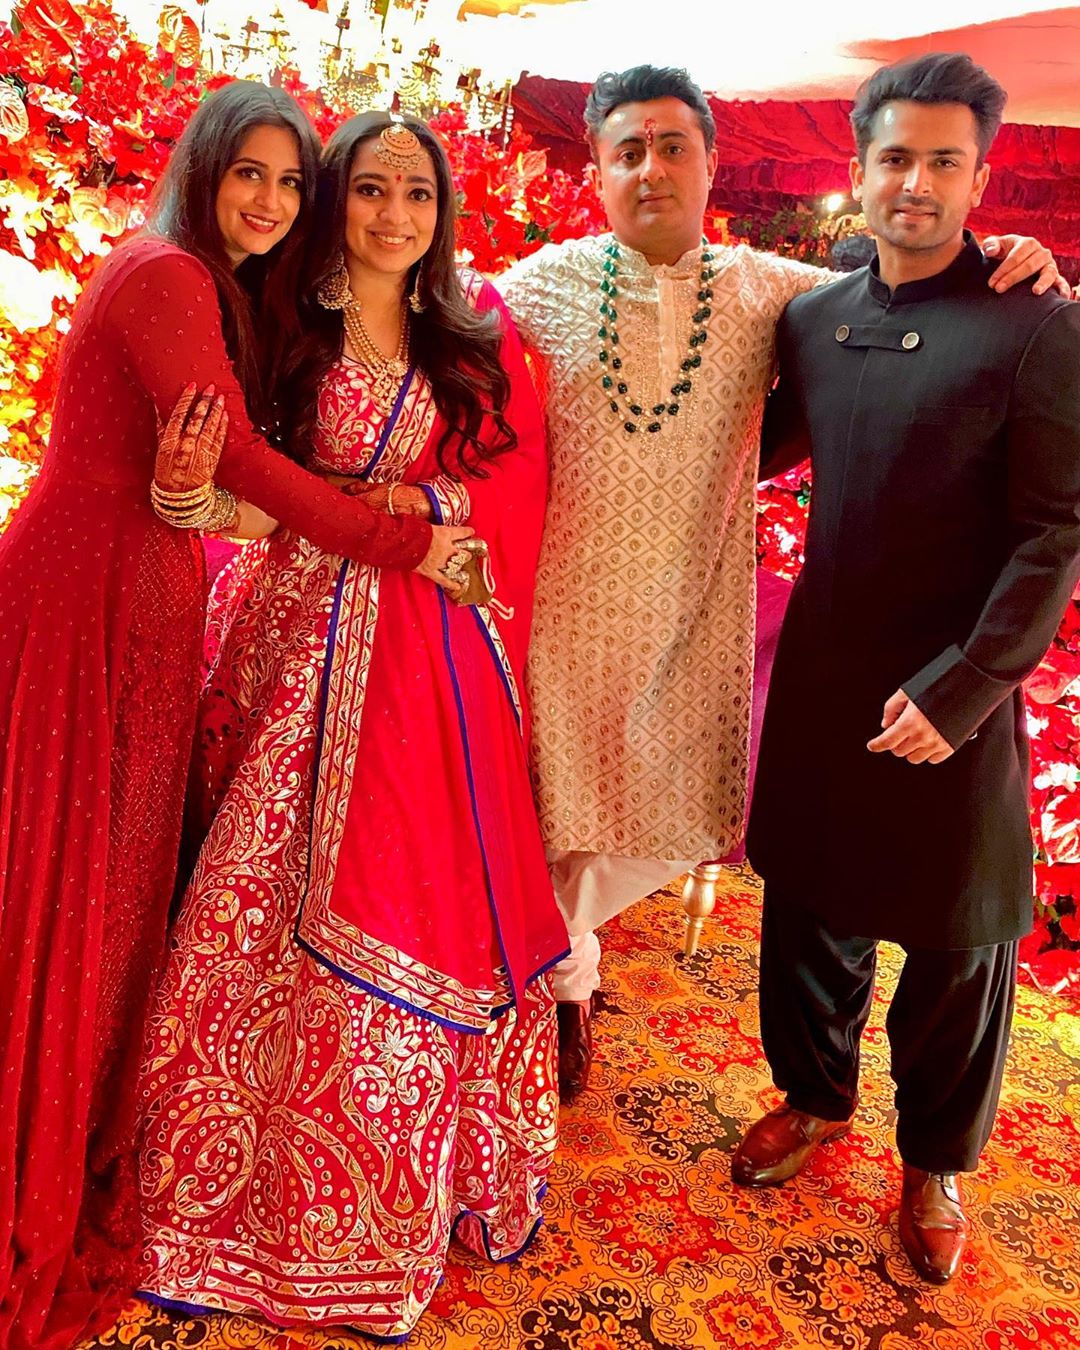 Shoaib Ibrahim and Dipika Kakar with the newly engaged couple